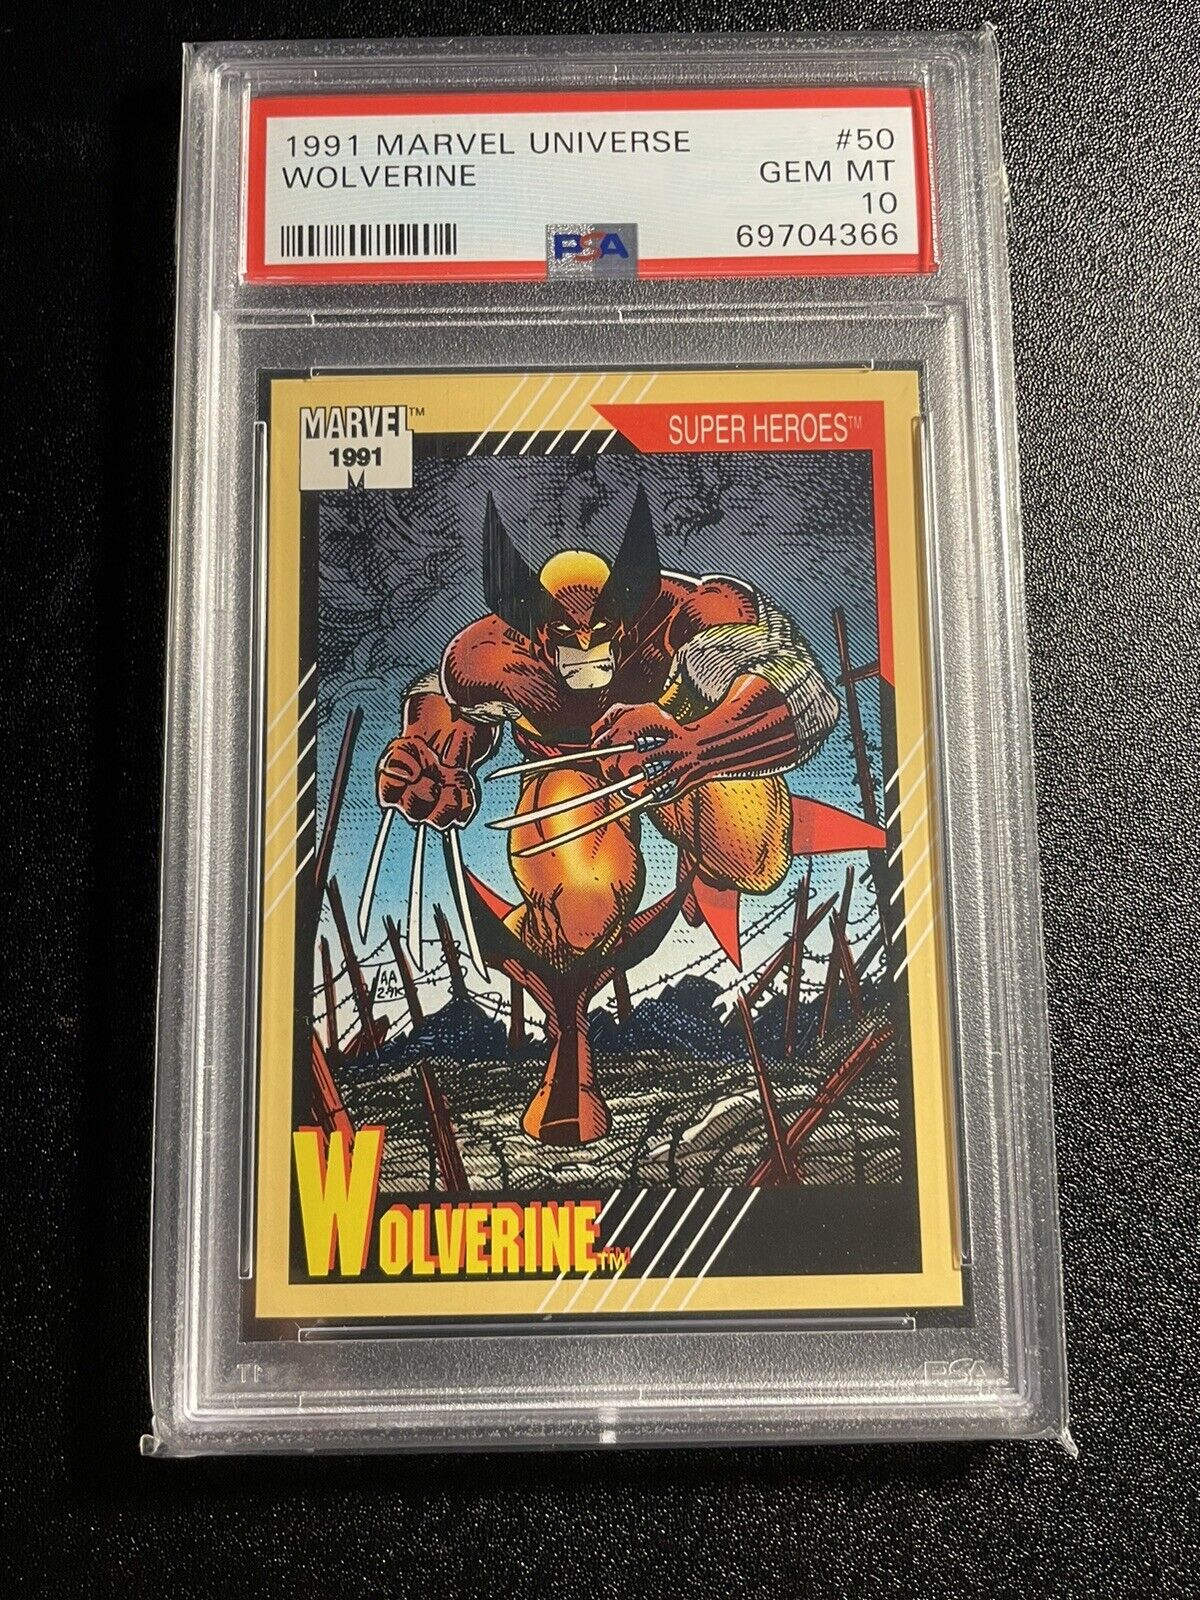 1991 Marvel Universe Wolverine #50 PSA 10 GEM MINT